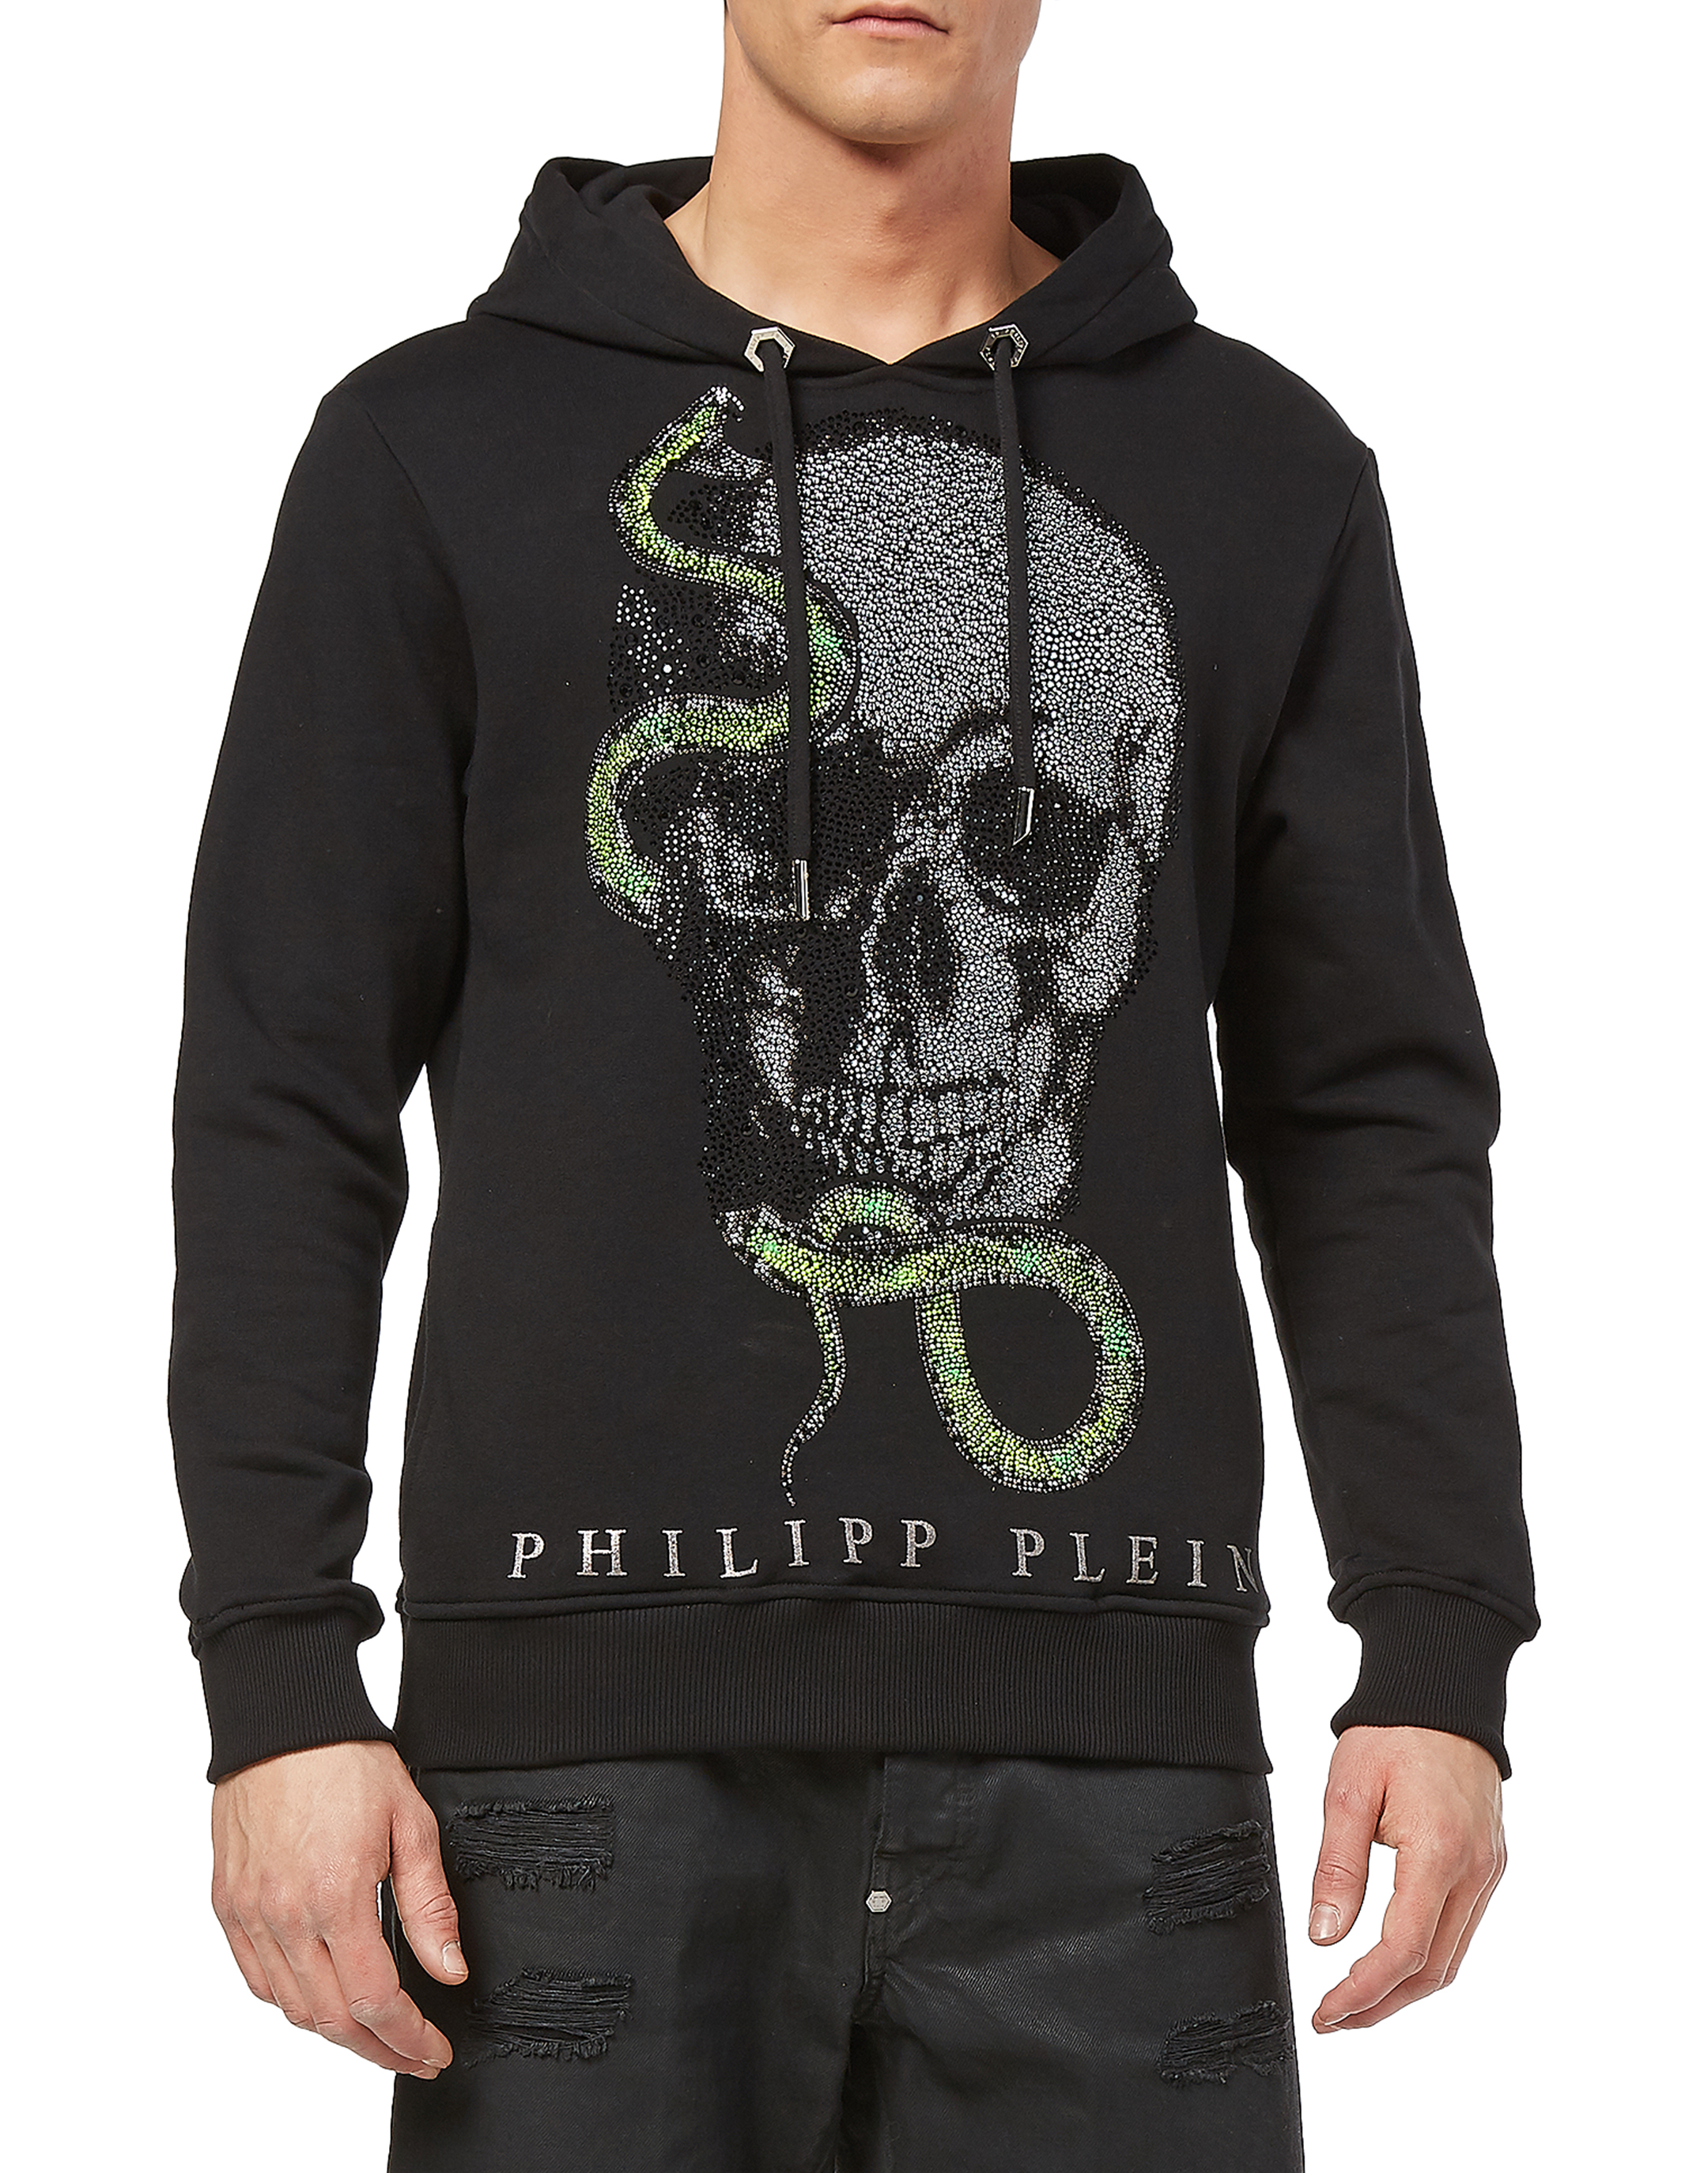 philippe plein hoodie